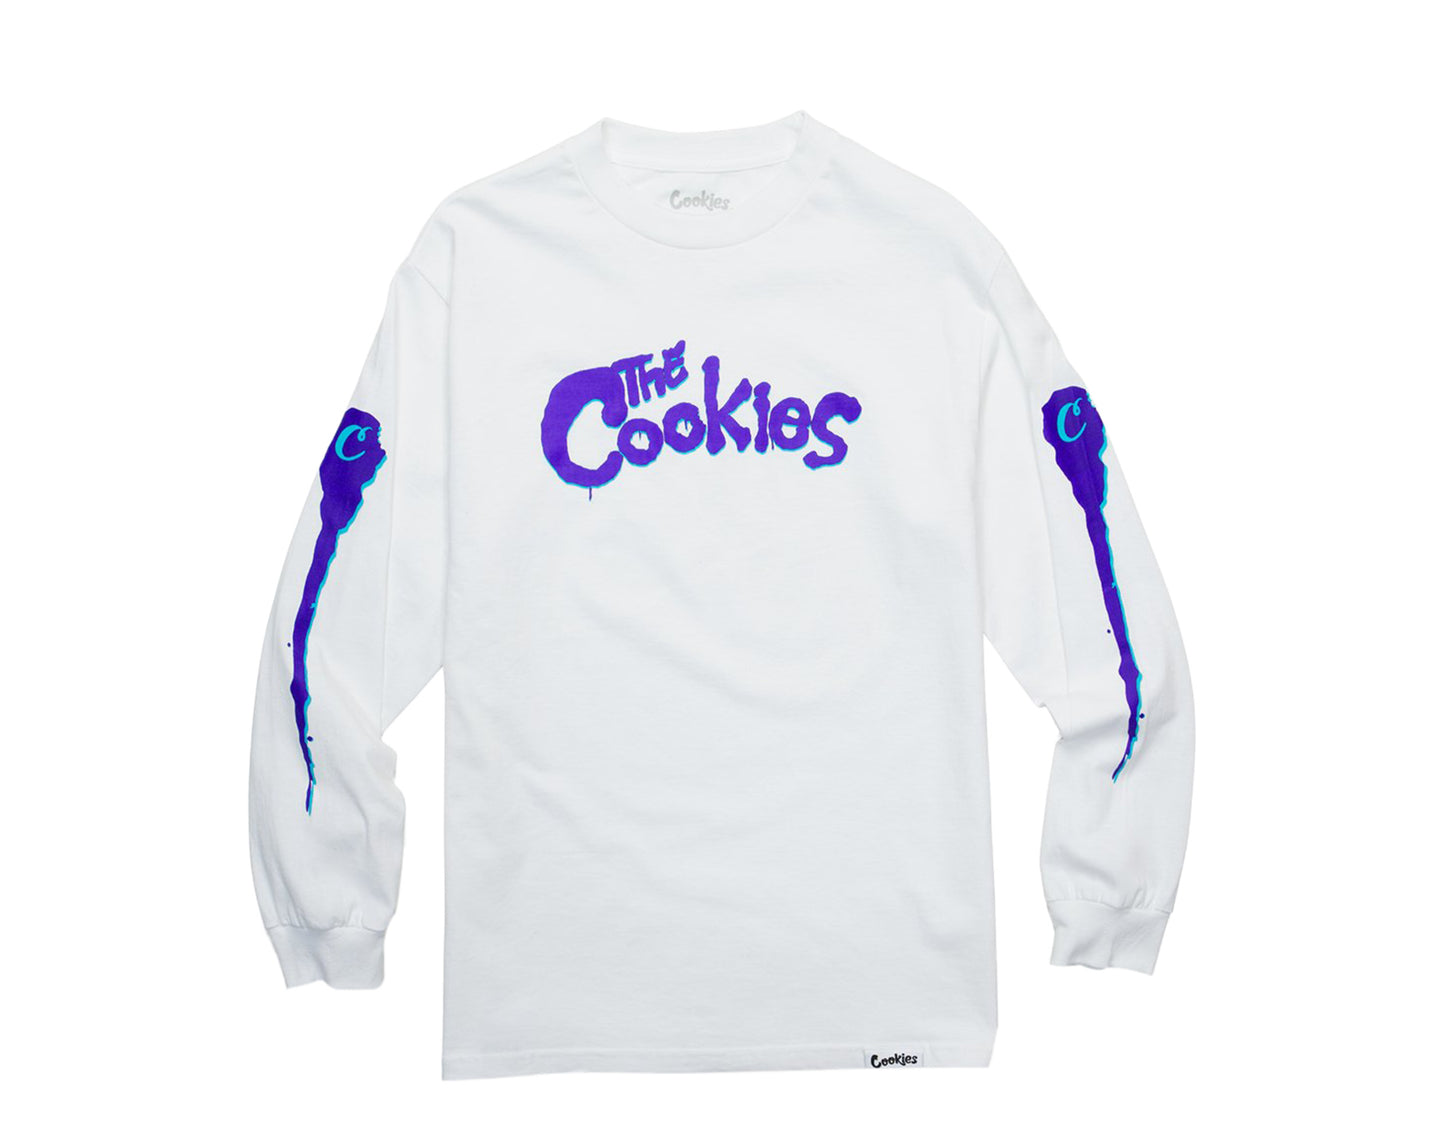 Cookies Cinemax Long Sleeve White Men's Tee Shirt 1546T4373-WHT